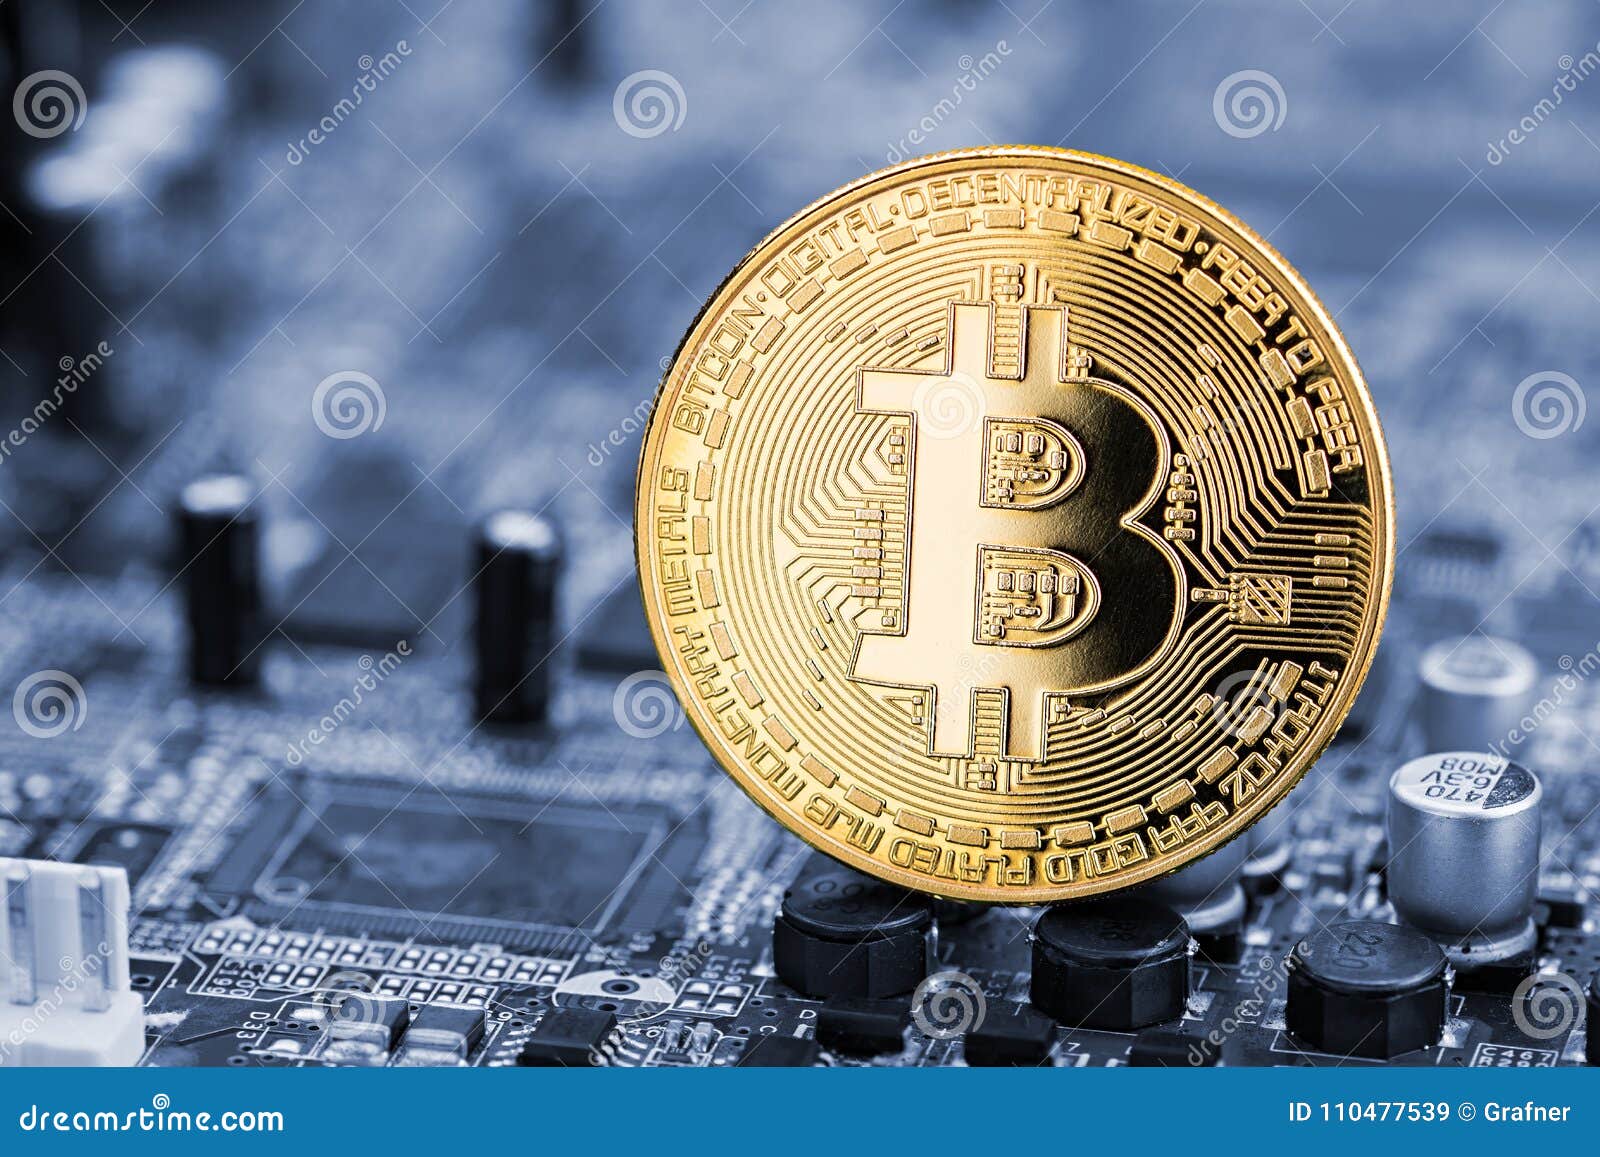 bitcoin-bitcoin mining crypto currency bitcoin